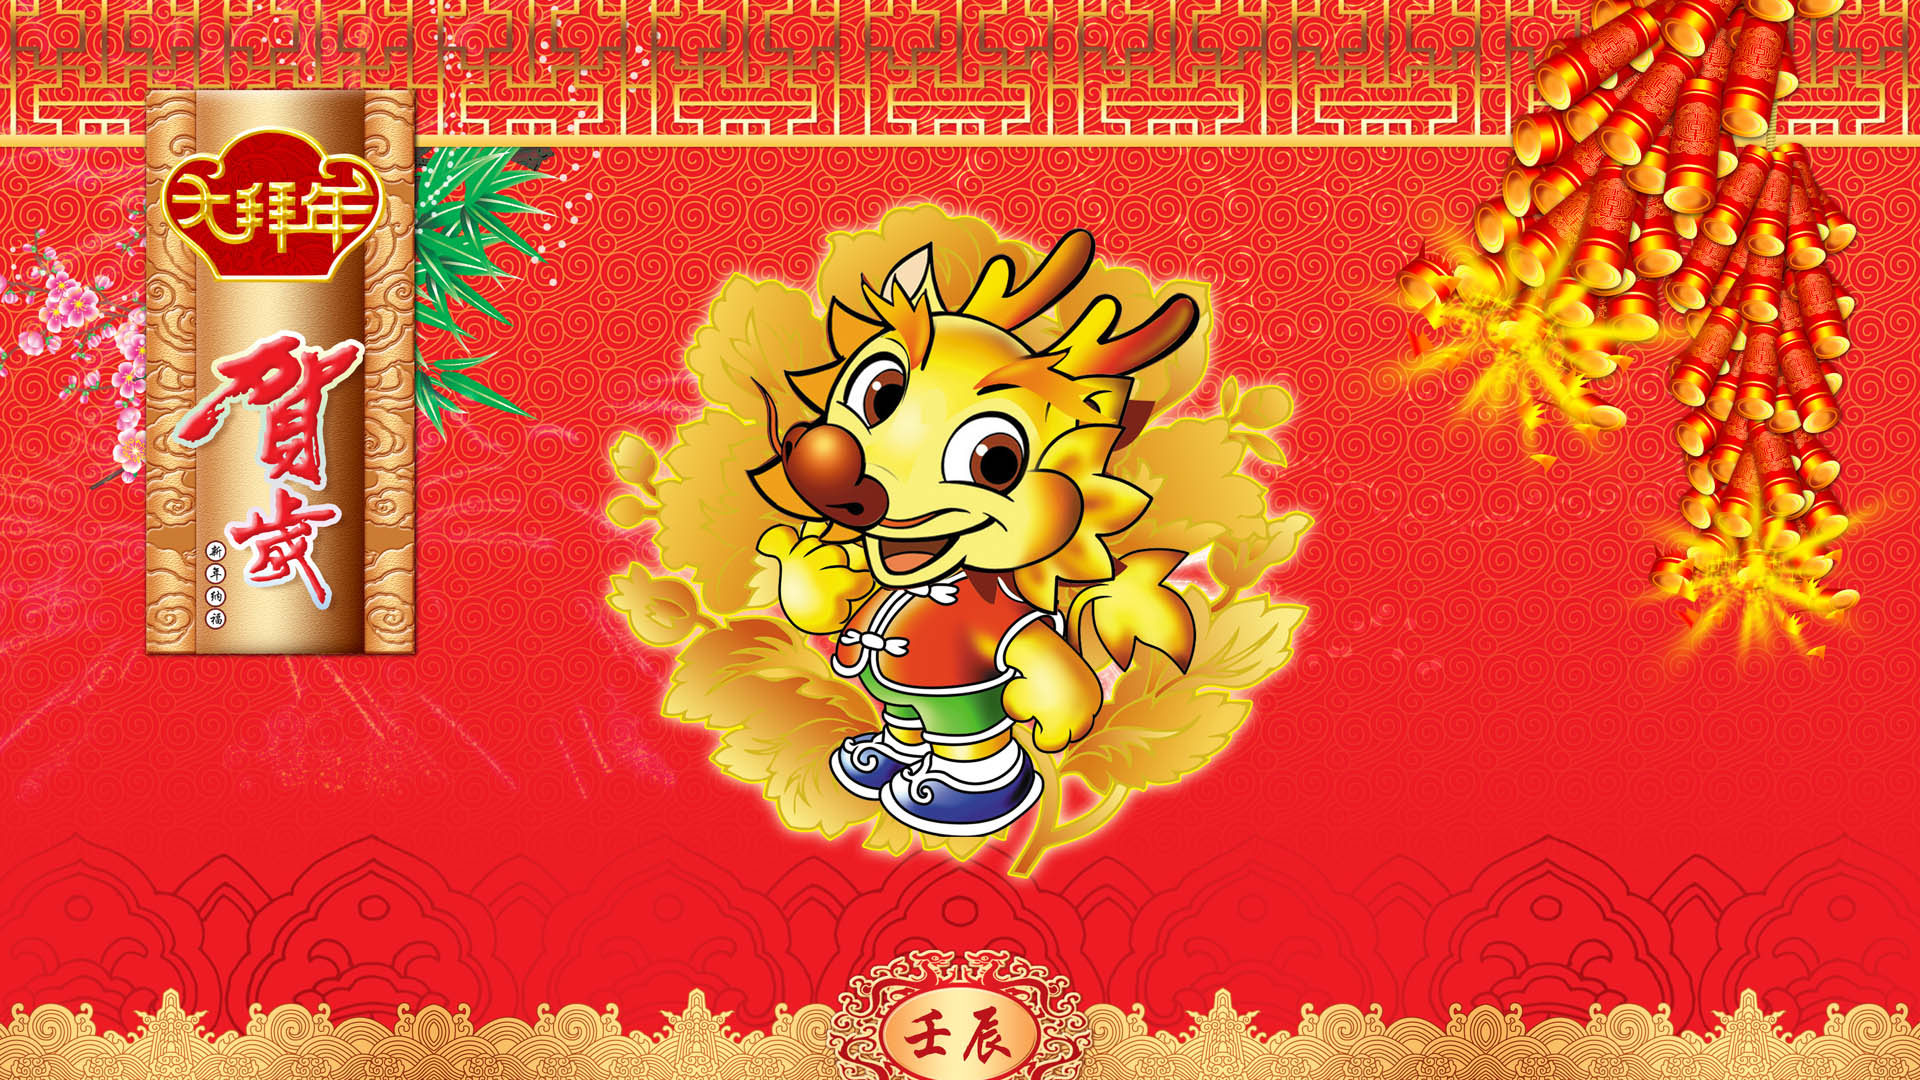 2012 Golden Dragon New Year greetings desktop wallpaper